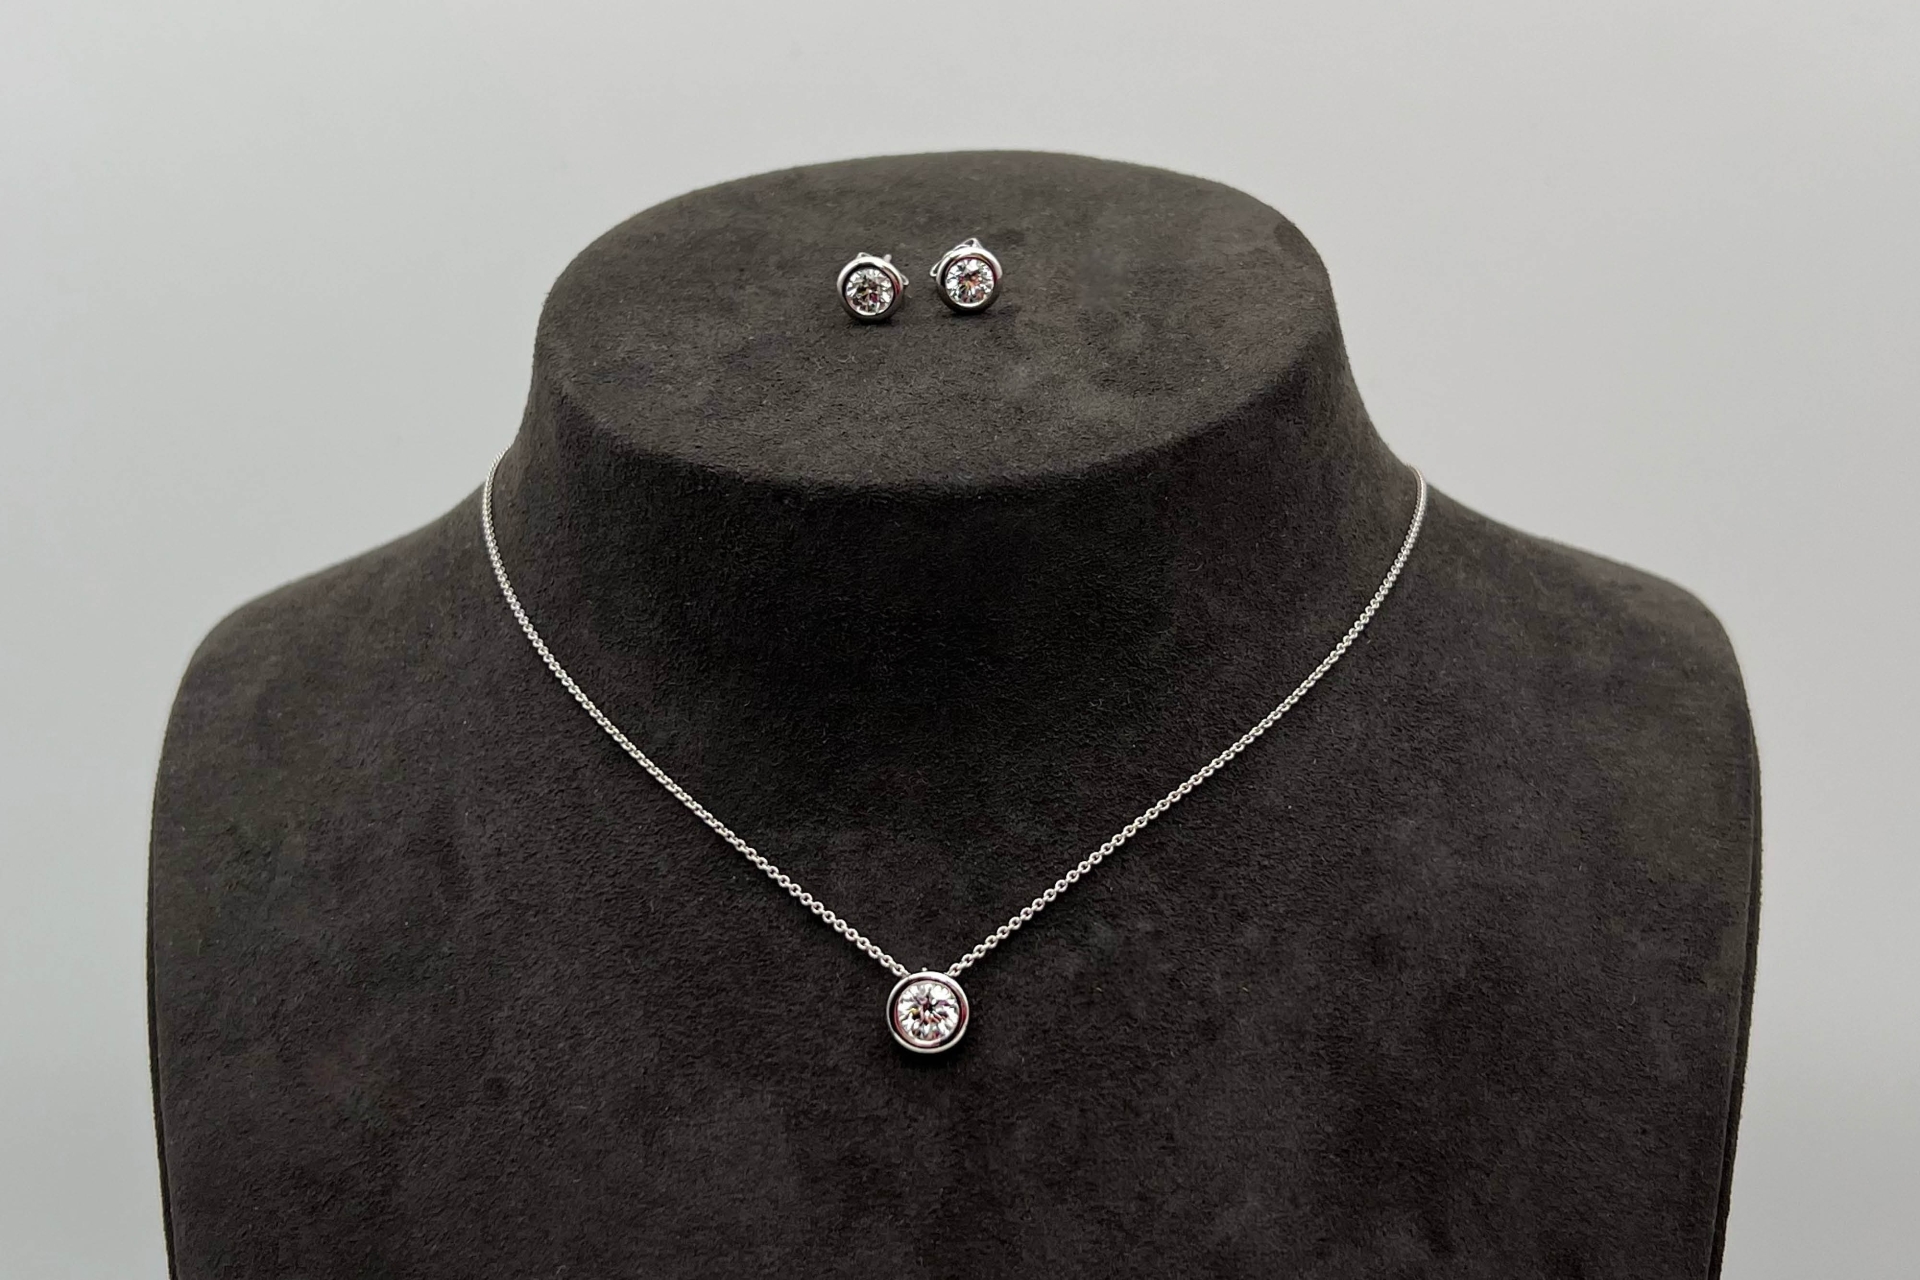 jennifer-kathe-schmuckfavoriten-luxury-jewelry-juwelier-brillantschmuck-diamanten4